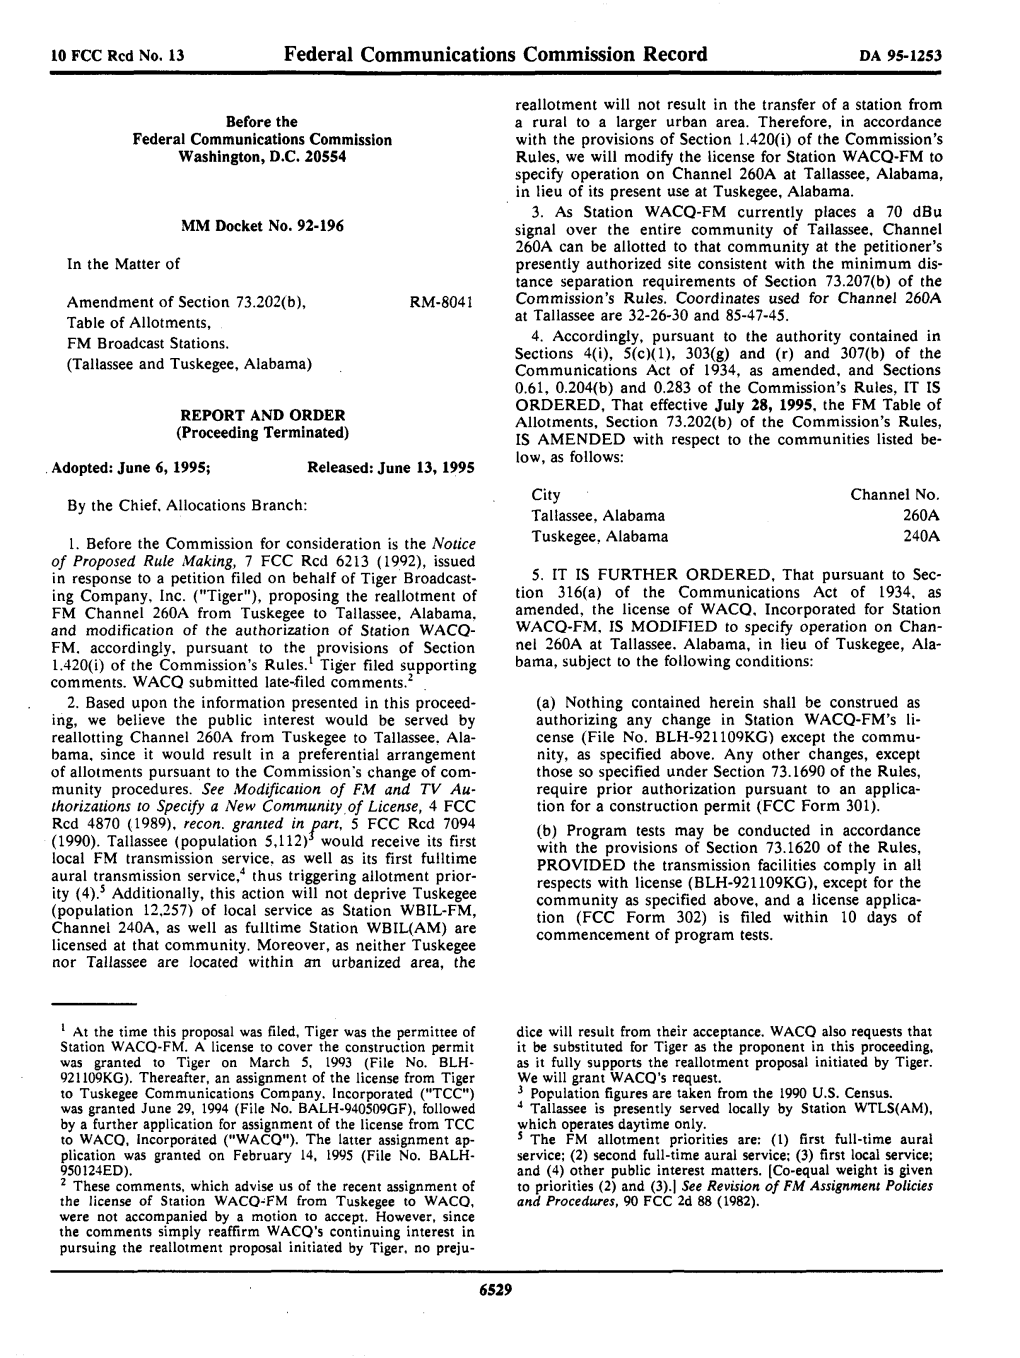 Federal Communications Commission Record DA 95-1253